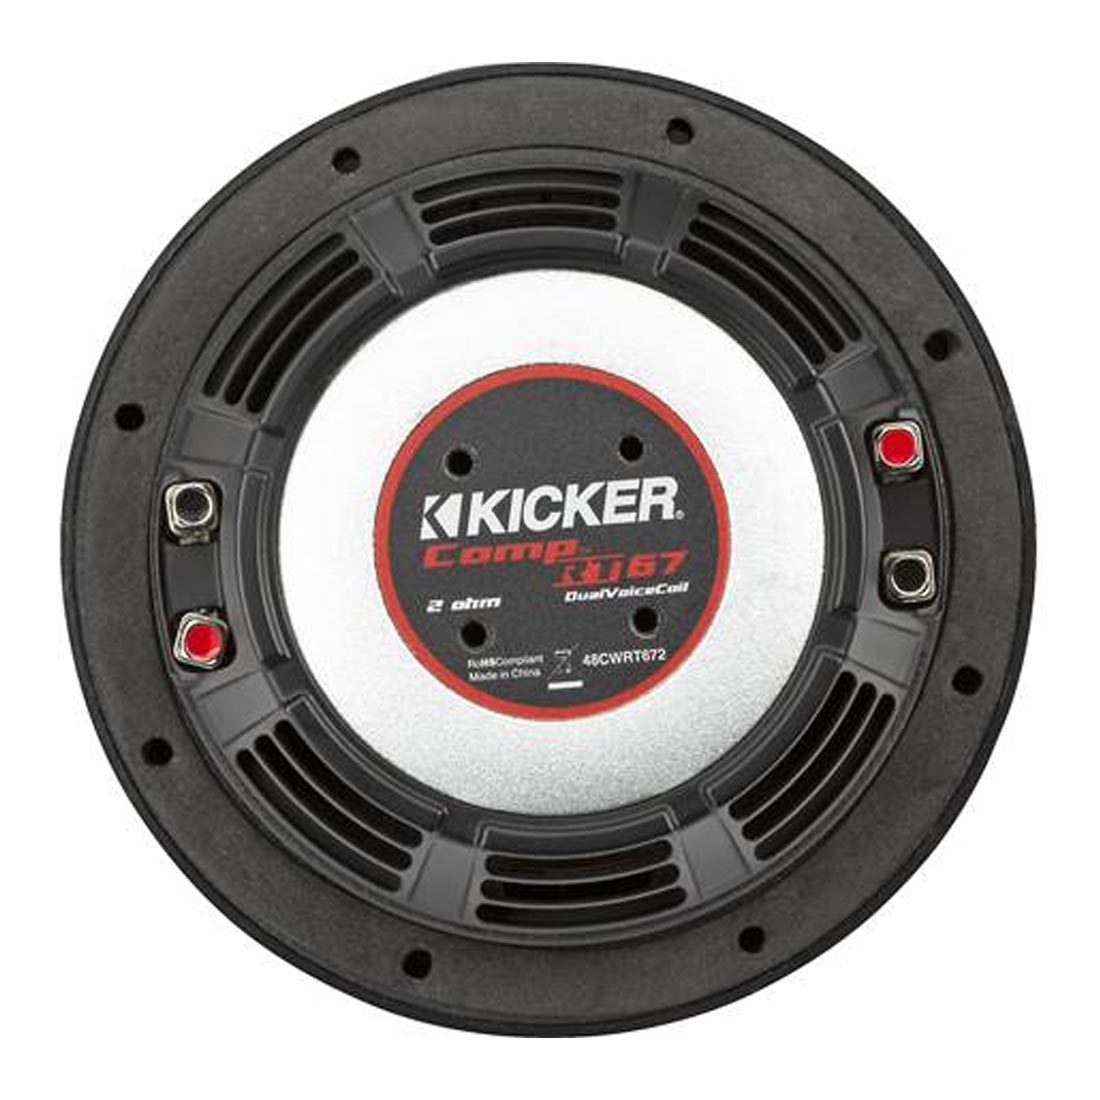 Kicker 48CWRT672 CompRT Series 6.75" 2-Ohm DVC Shallow-Mount Subwoofer